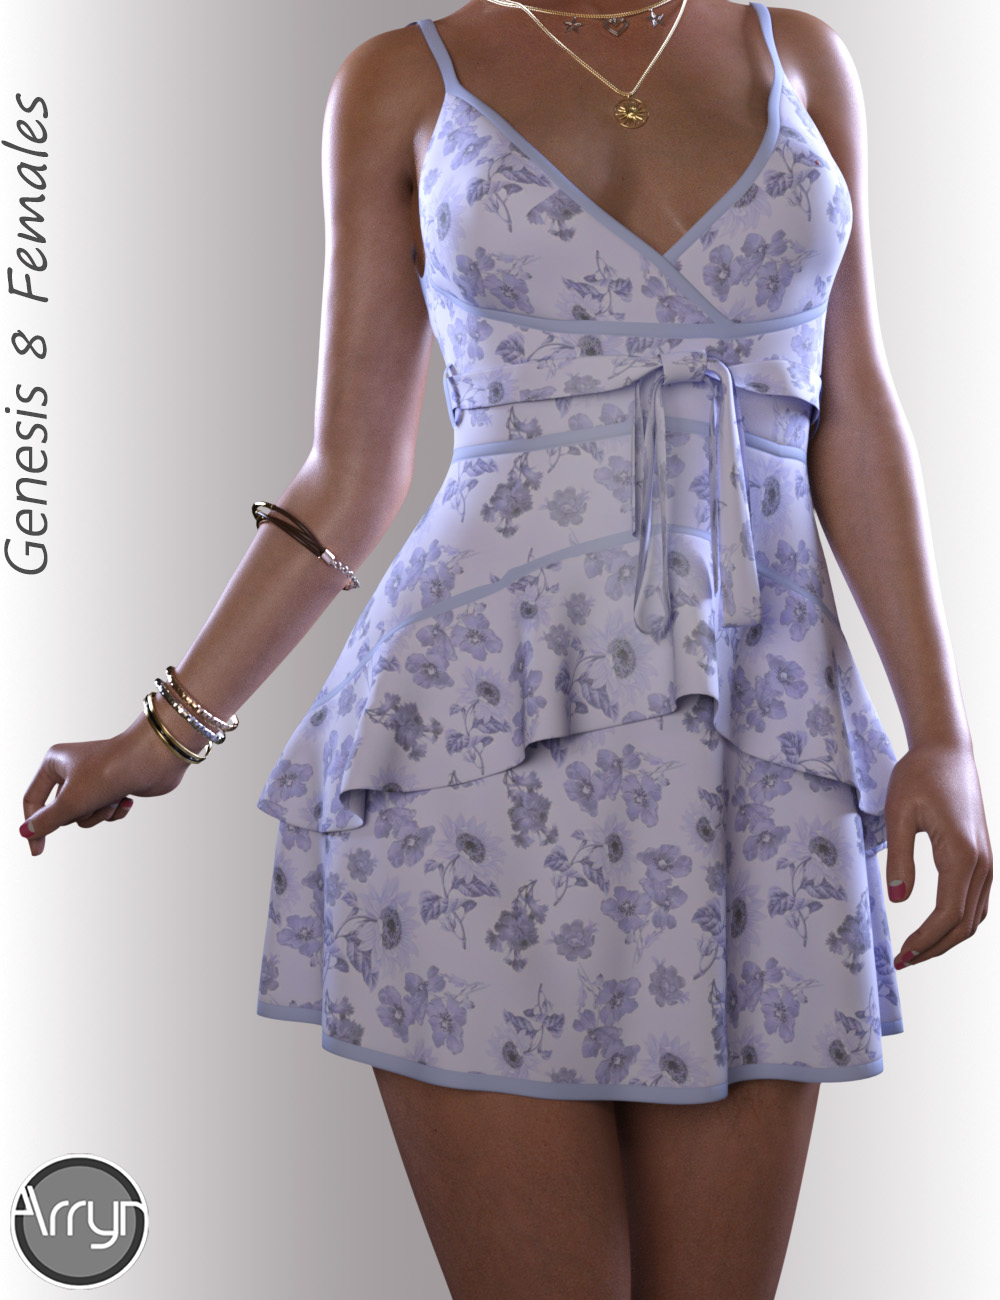 dForce Leah Candy Dress Outfit for Genesis 8 Female(s) | Daz 3D